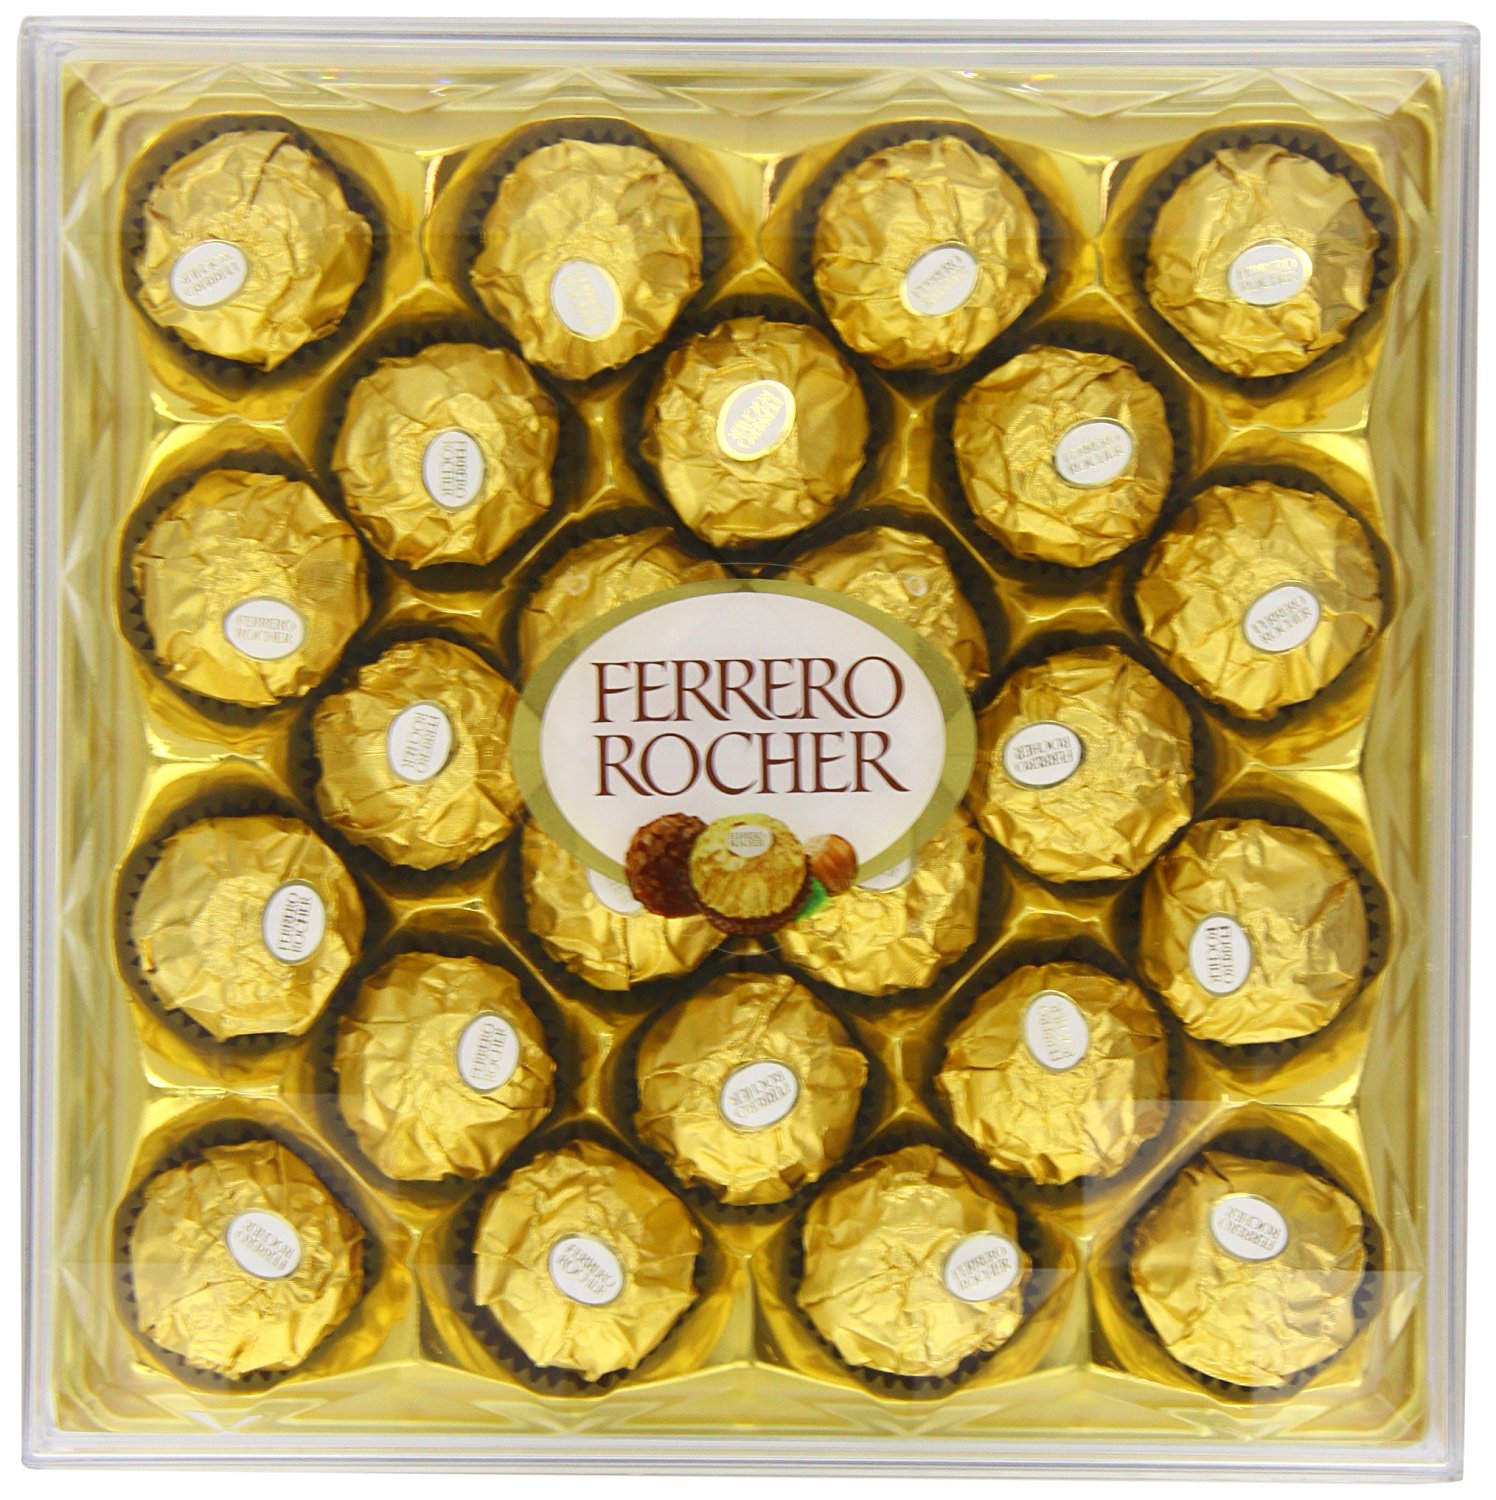 Coffret de 24 Ferrero Rocher Image